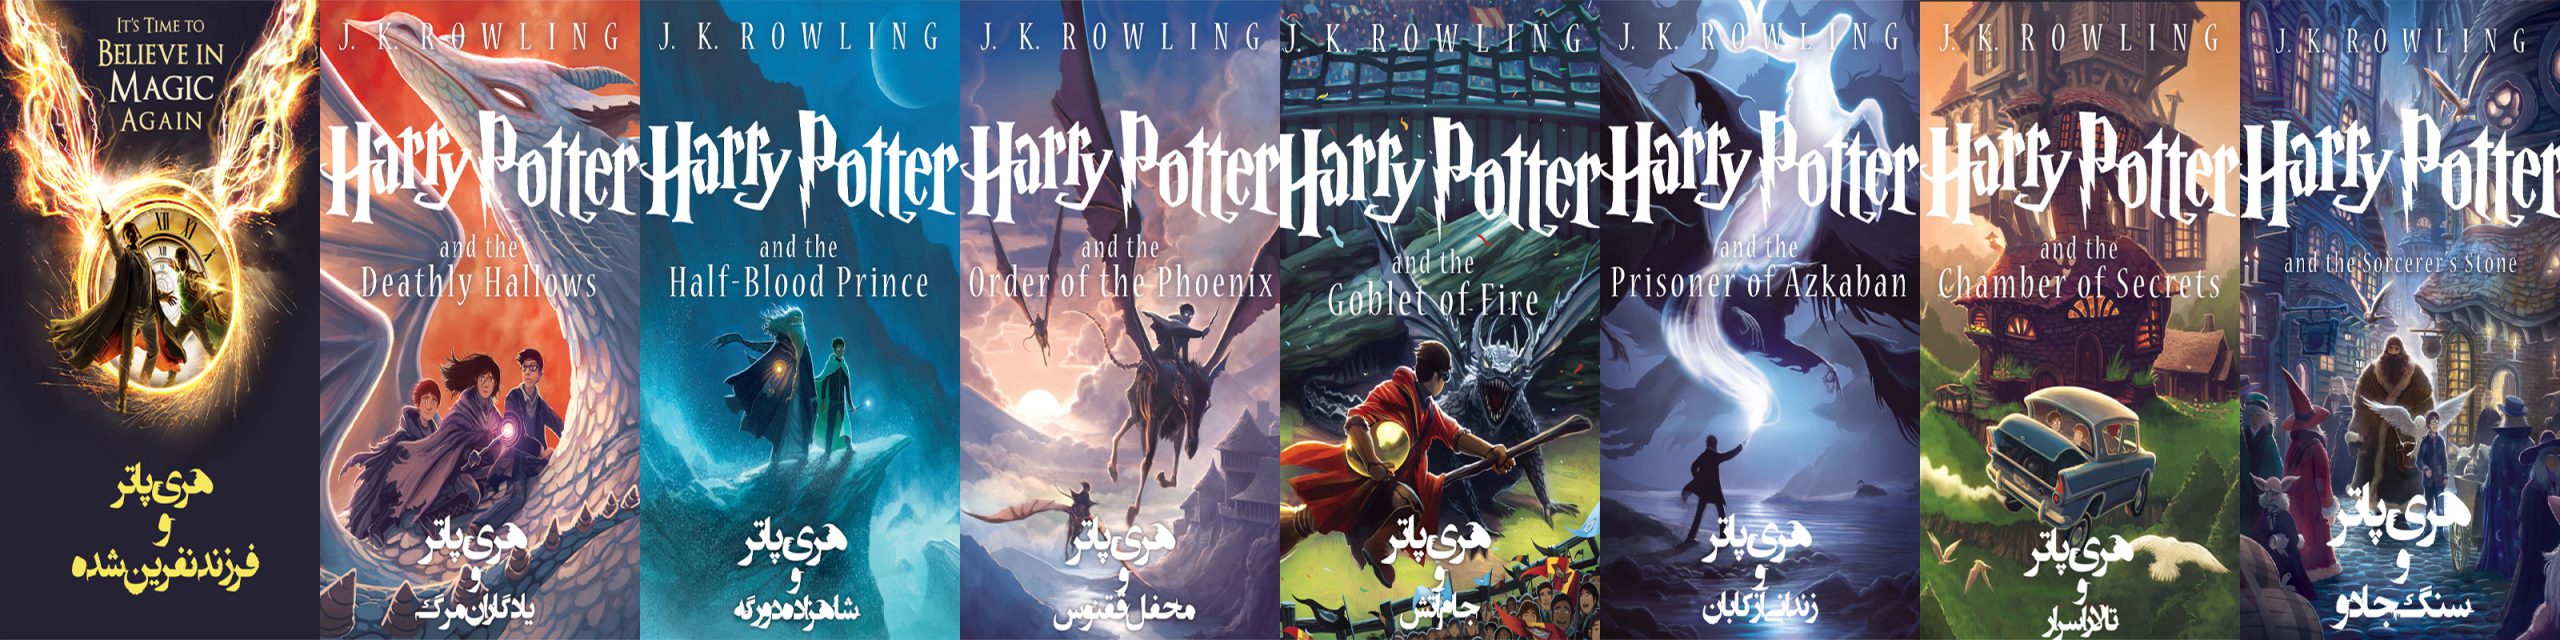 Harry Potter Series Slide